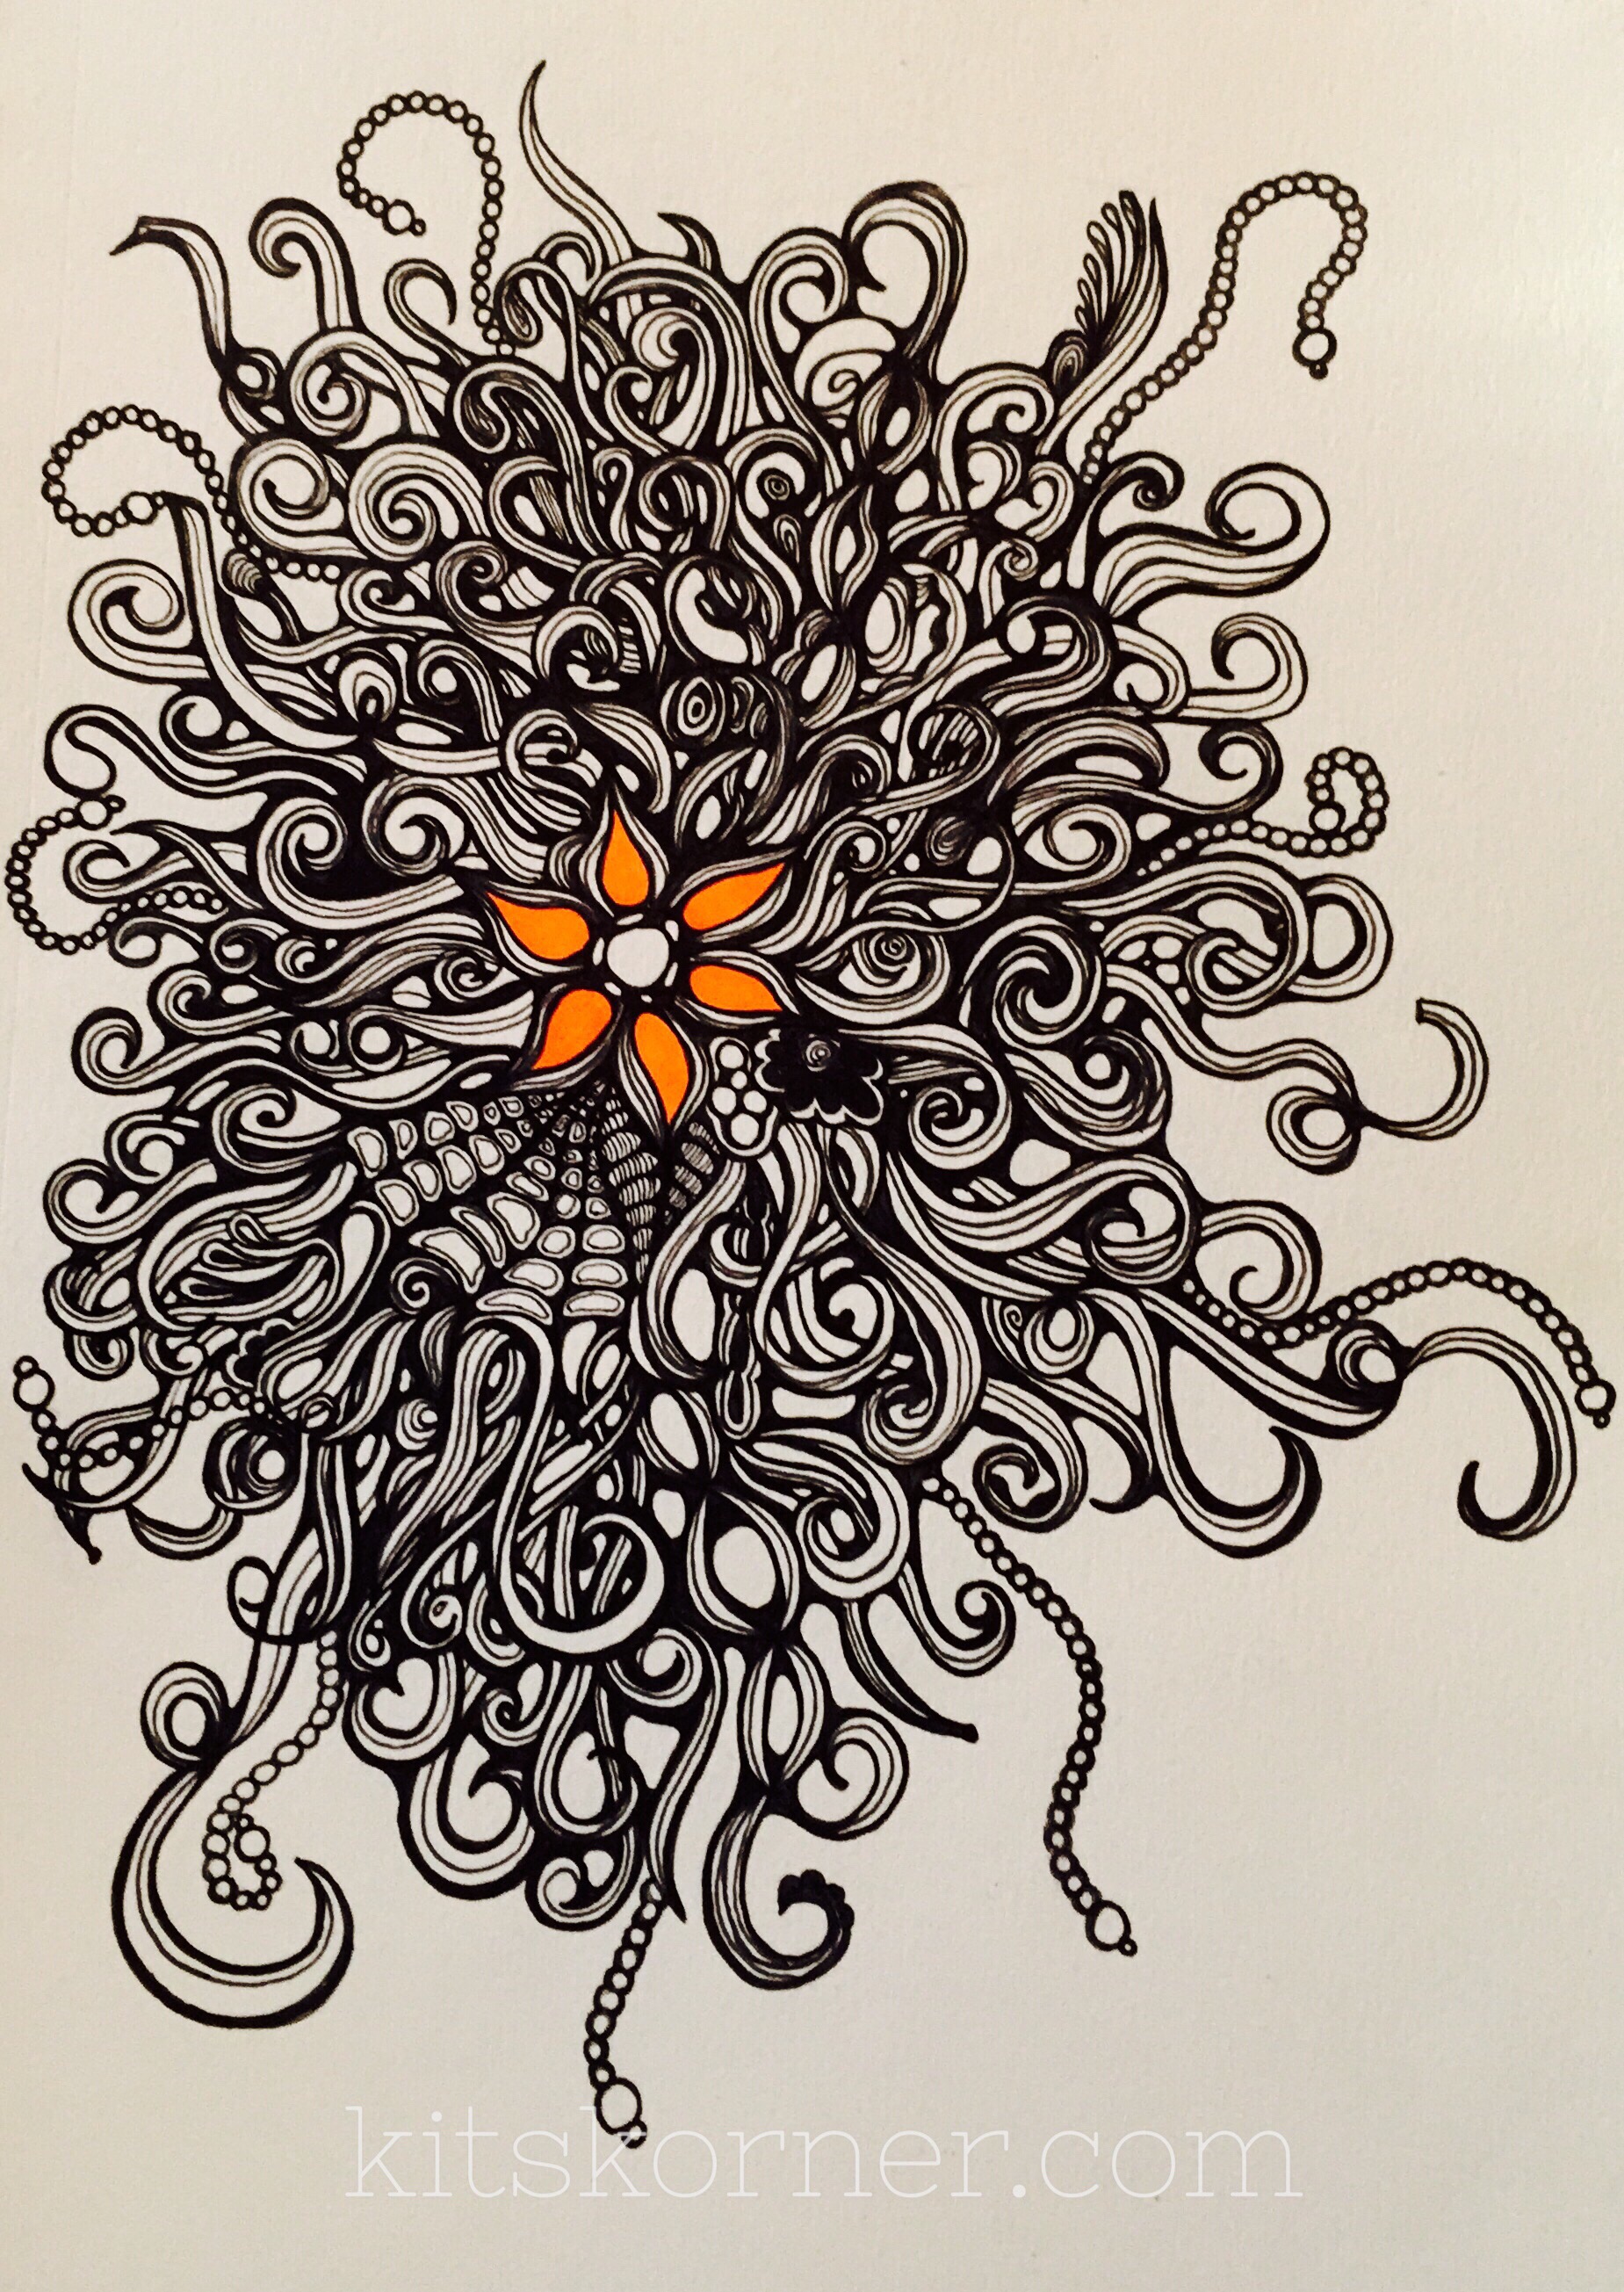 Sketchbook : Burst Of Swirls